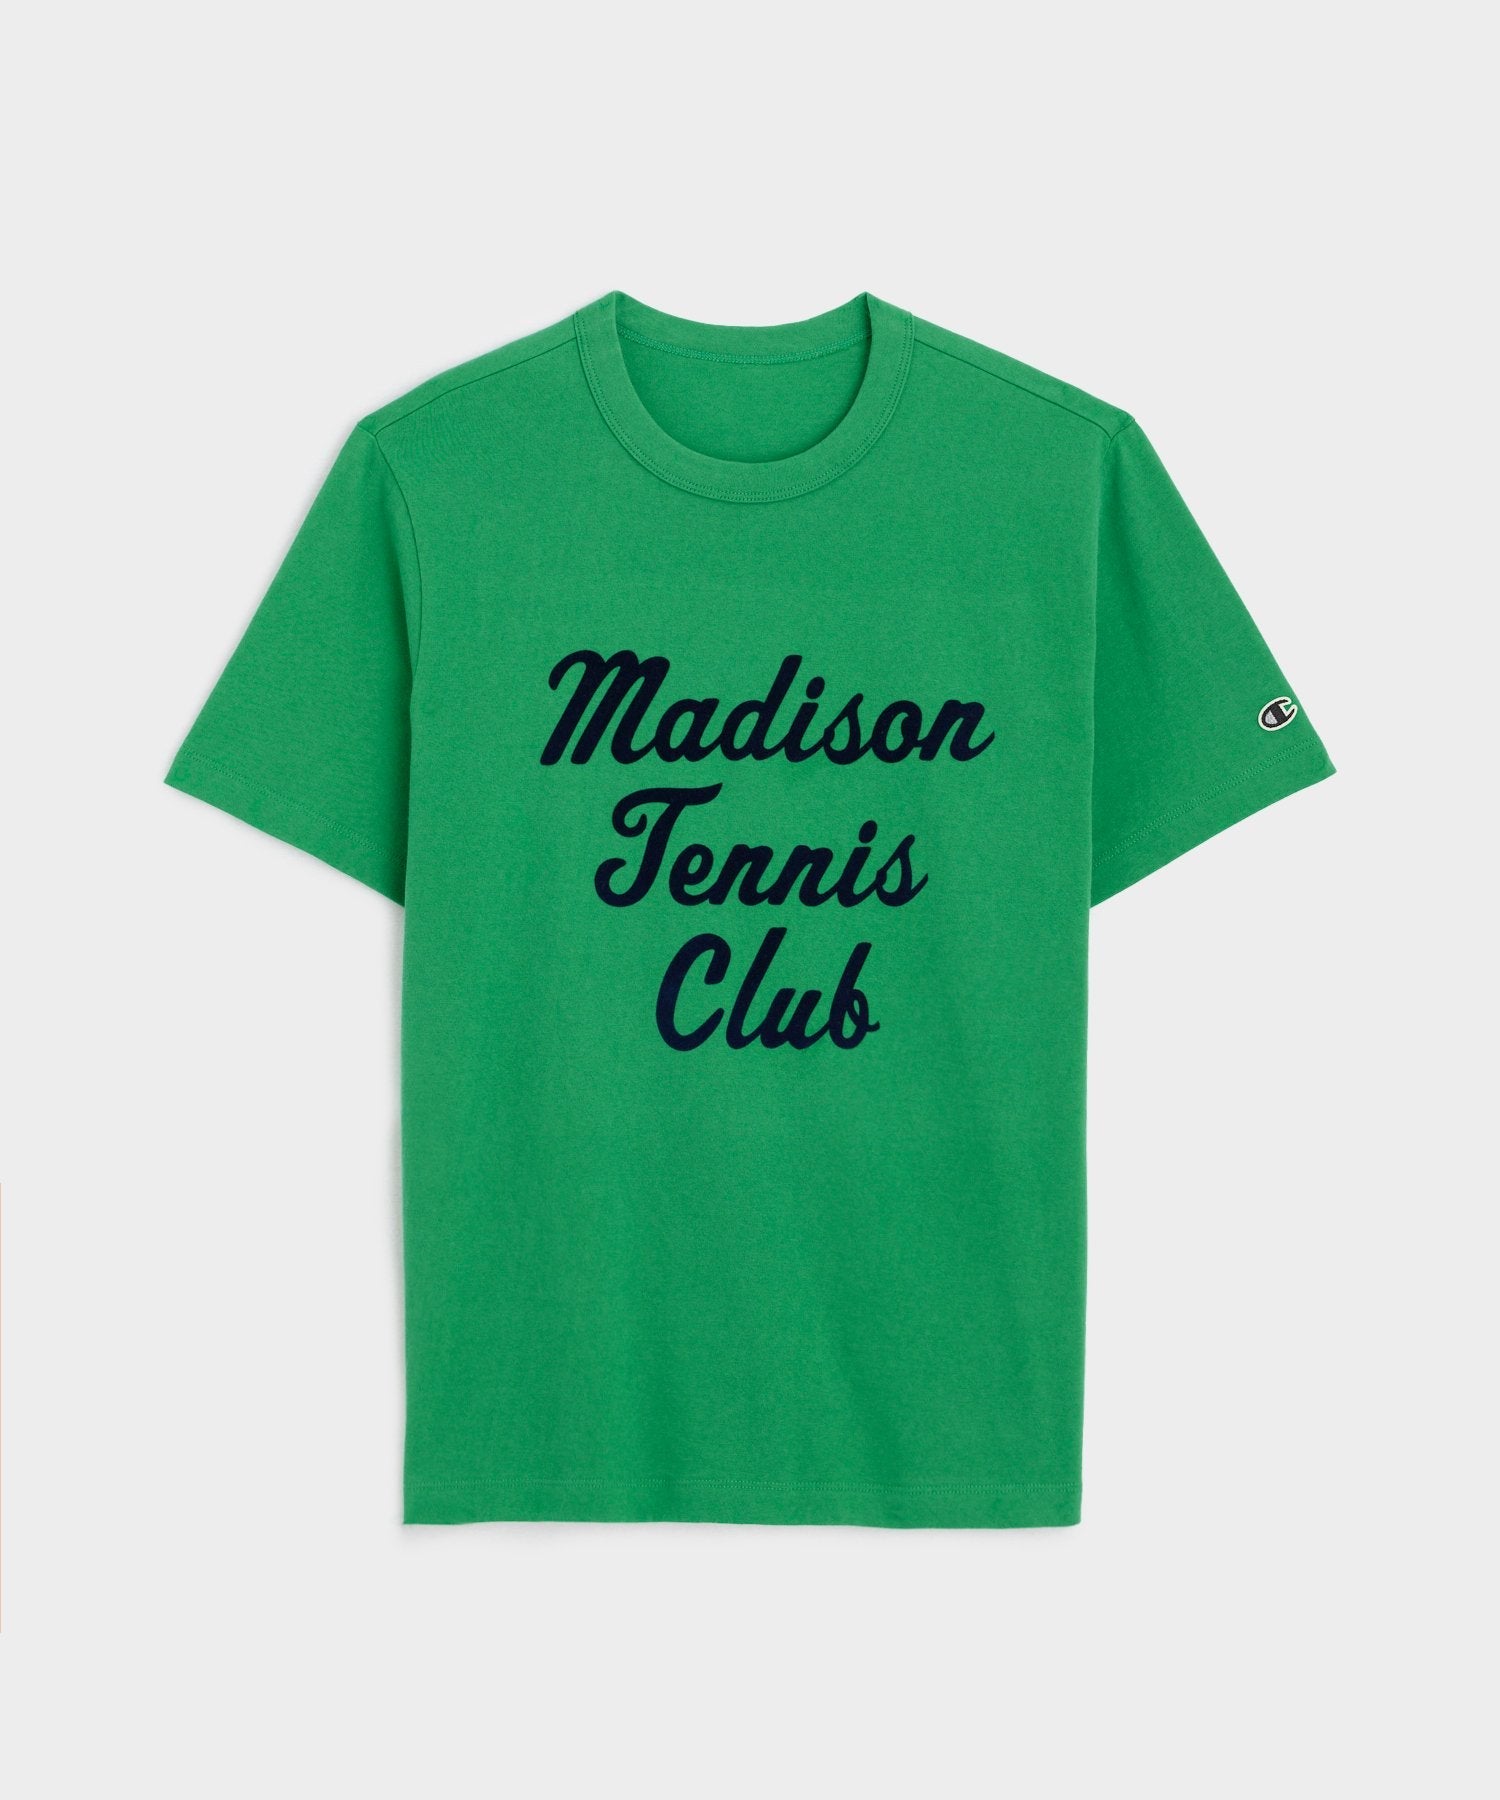 Champion Madison Tennis Club Tee in Ivy